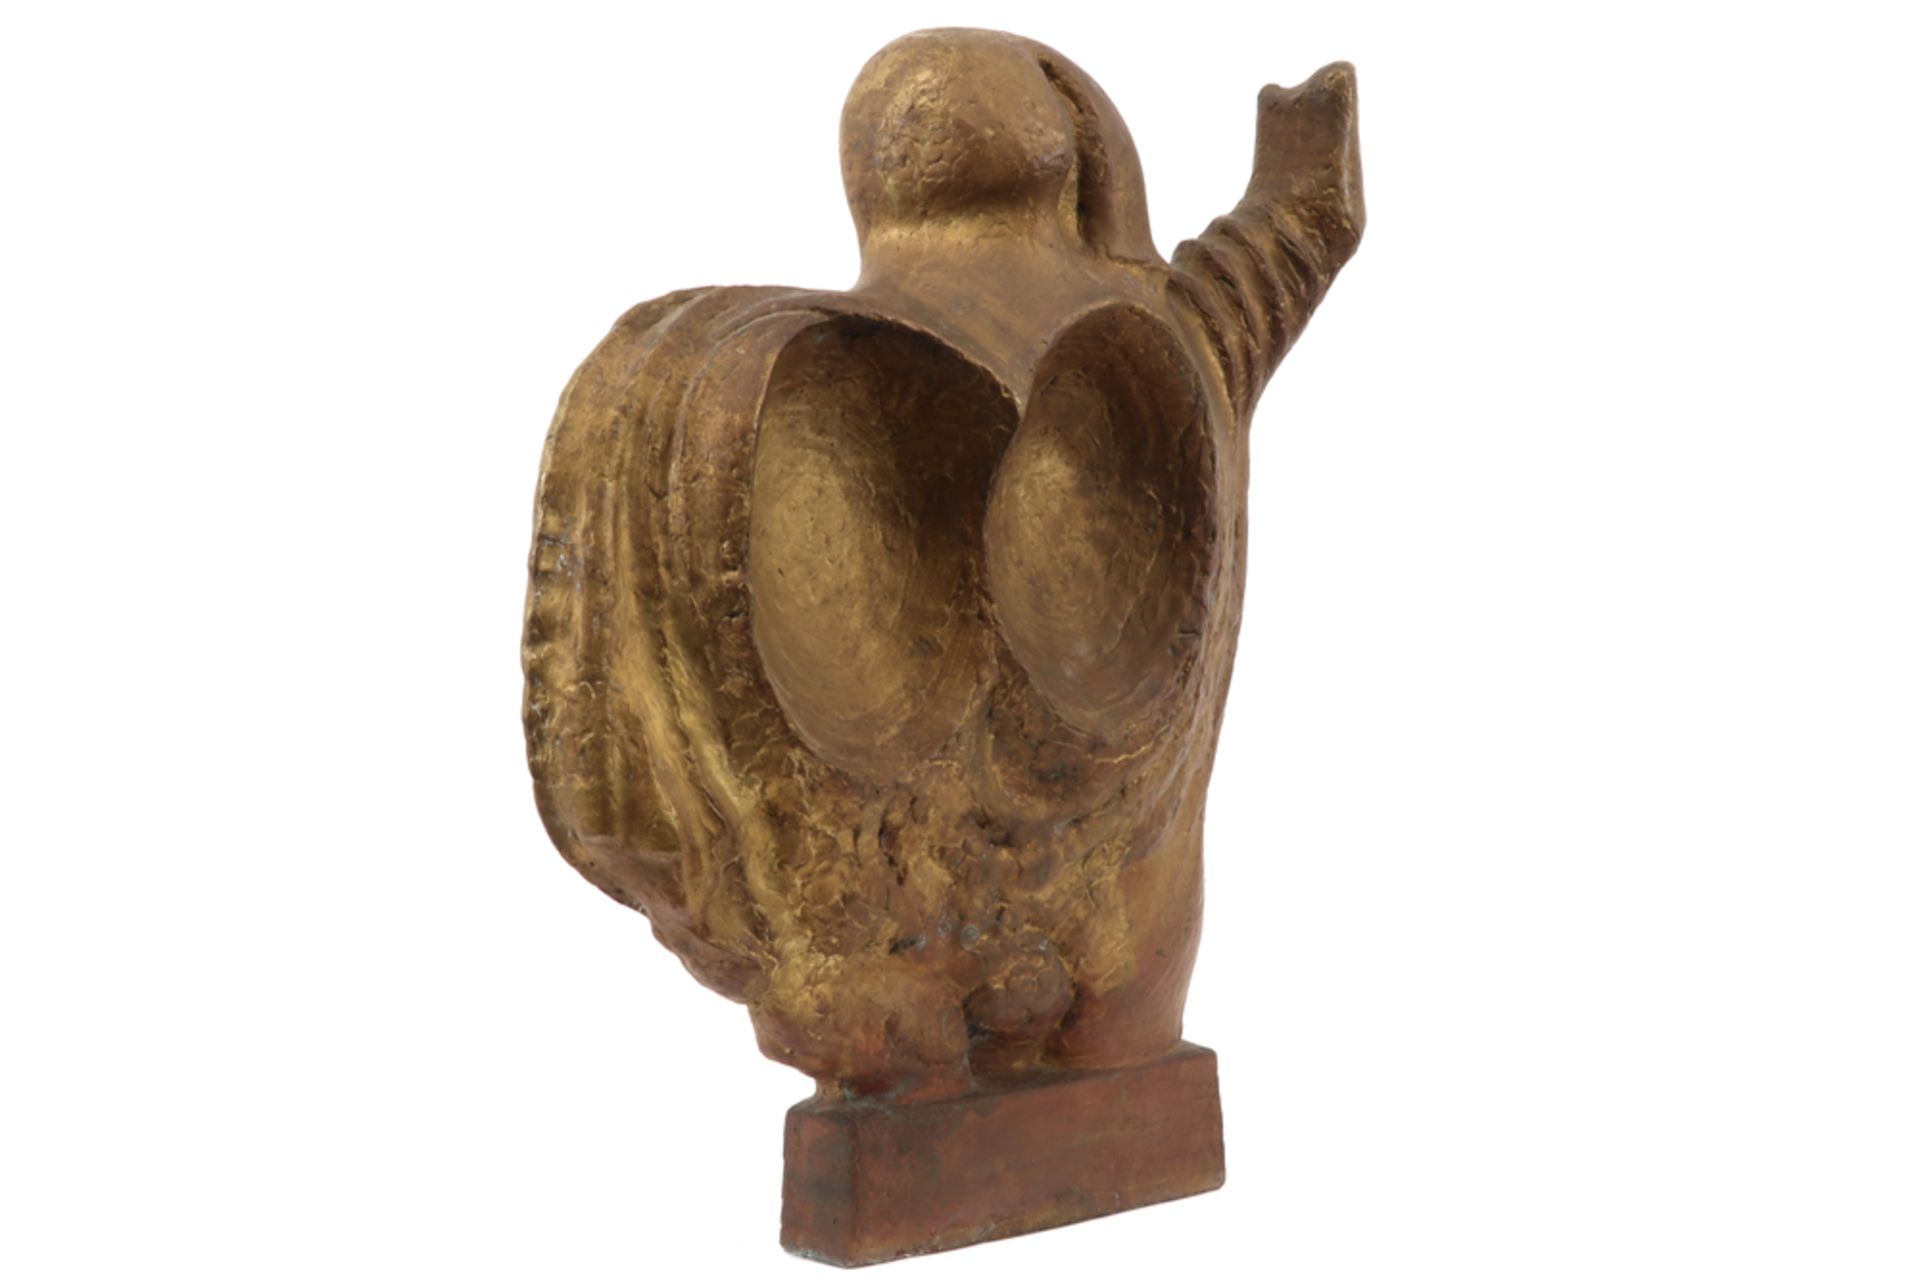 20th Cent. Belgian sculpture in bronze - with monogram of Monique Guebels ||GUEBELS MONIQUE (° 1921) - Image 2 of 5